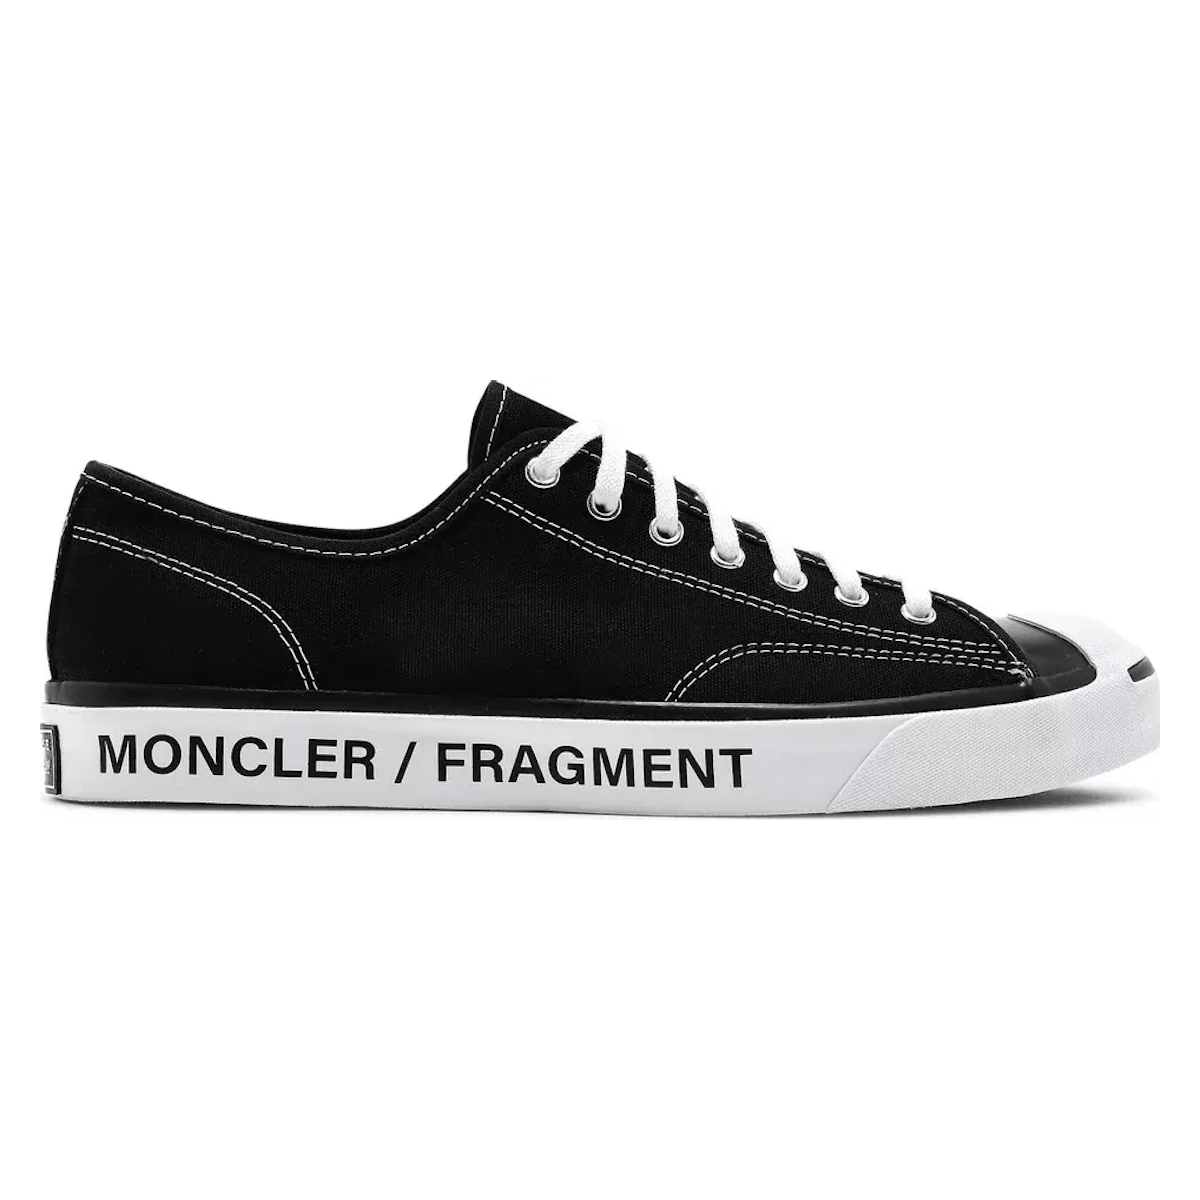 Fragment Design x Moncler x Converse Jack Purcell "Black"